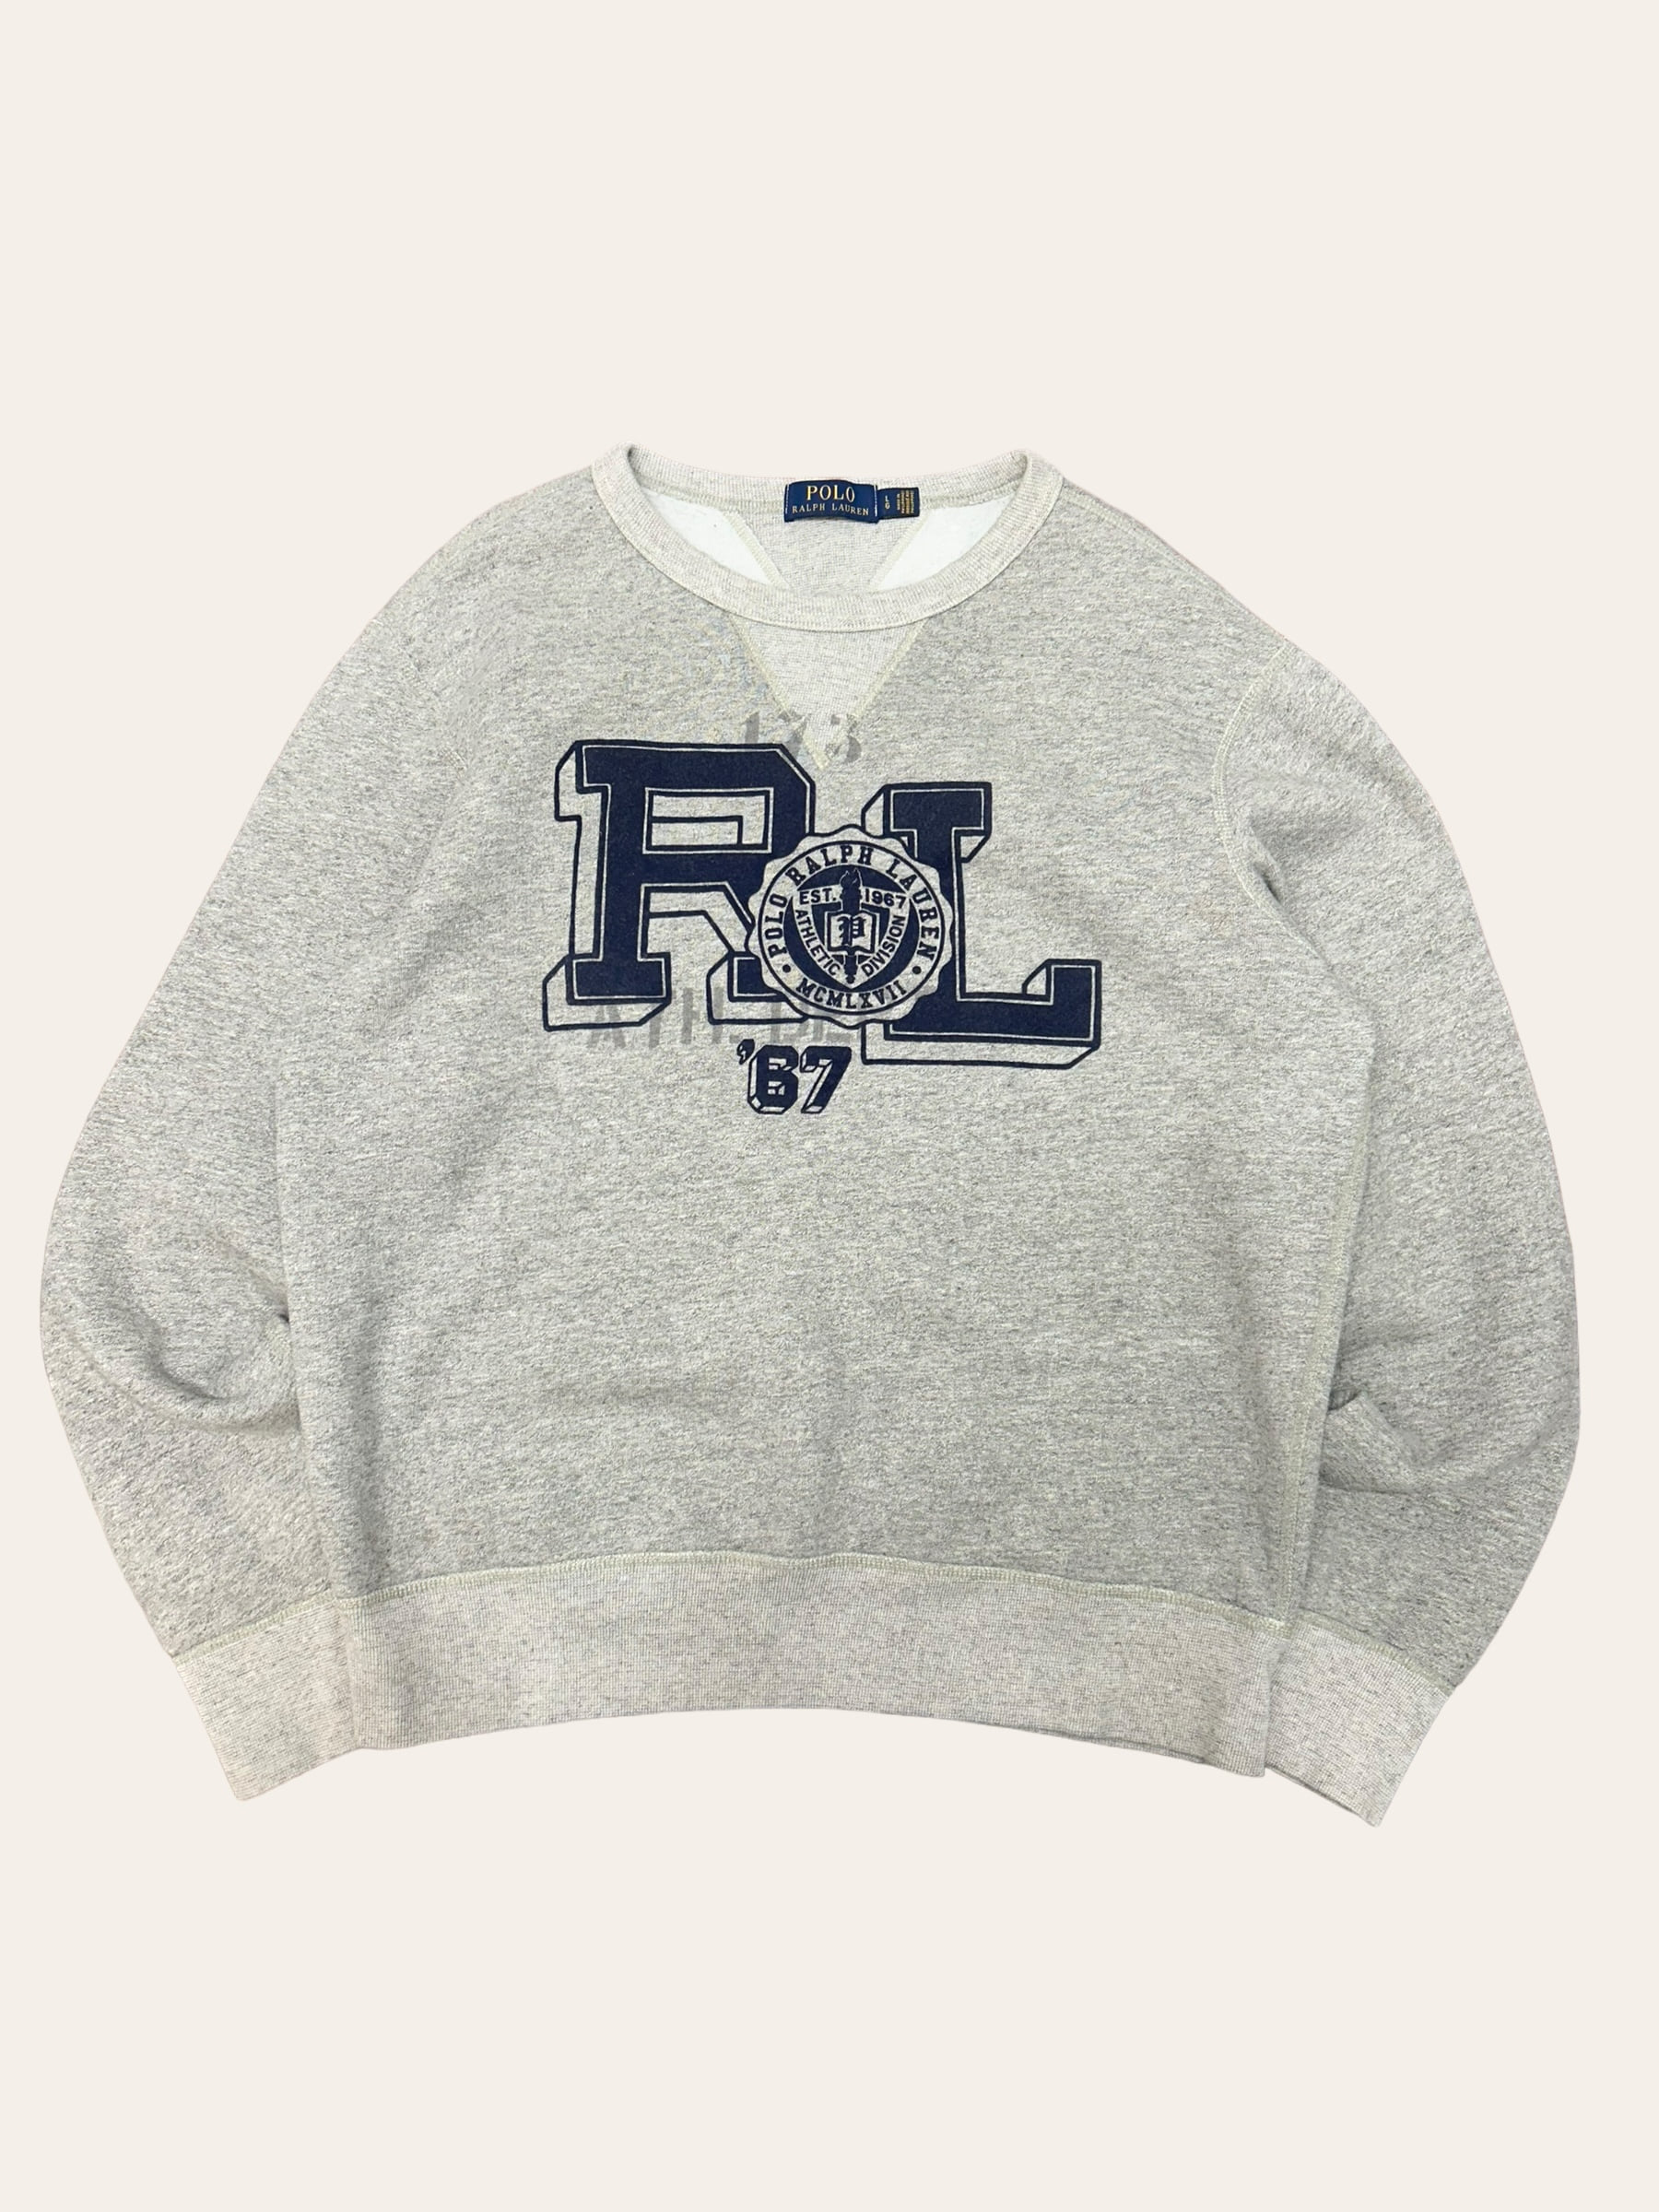 Polo ralph lauren gray RL printing sweatshirt L